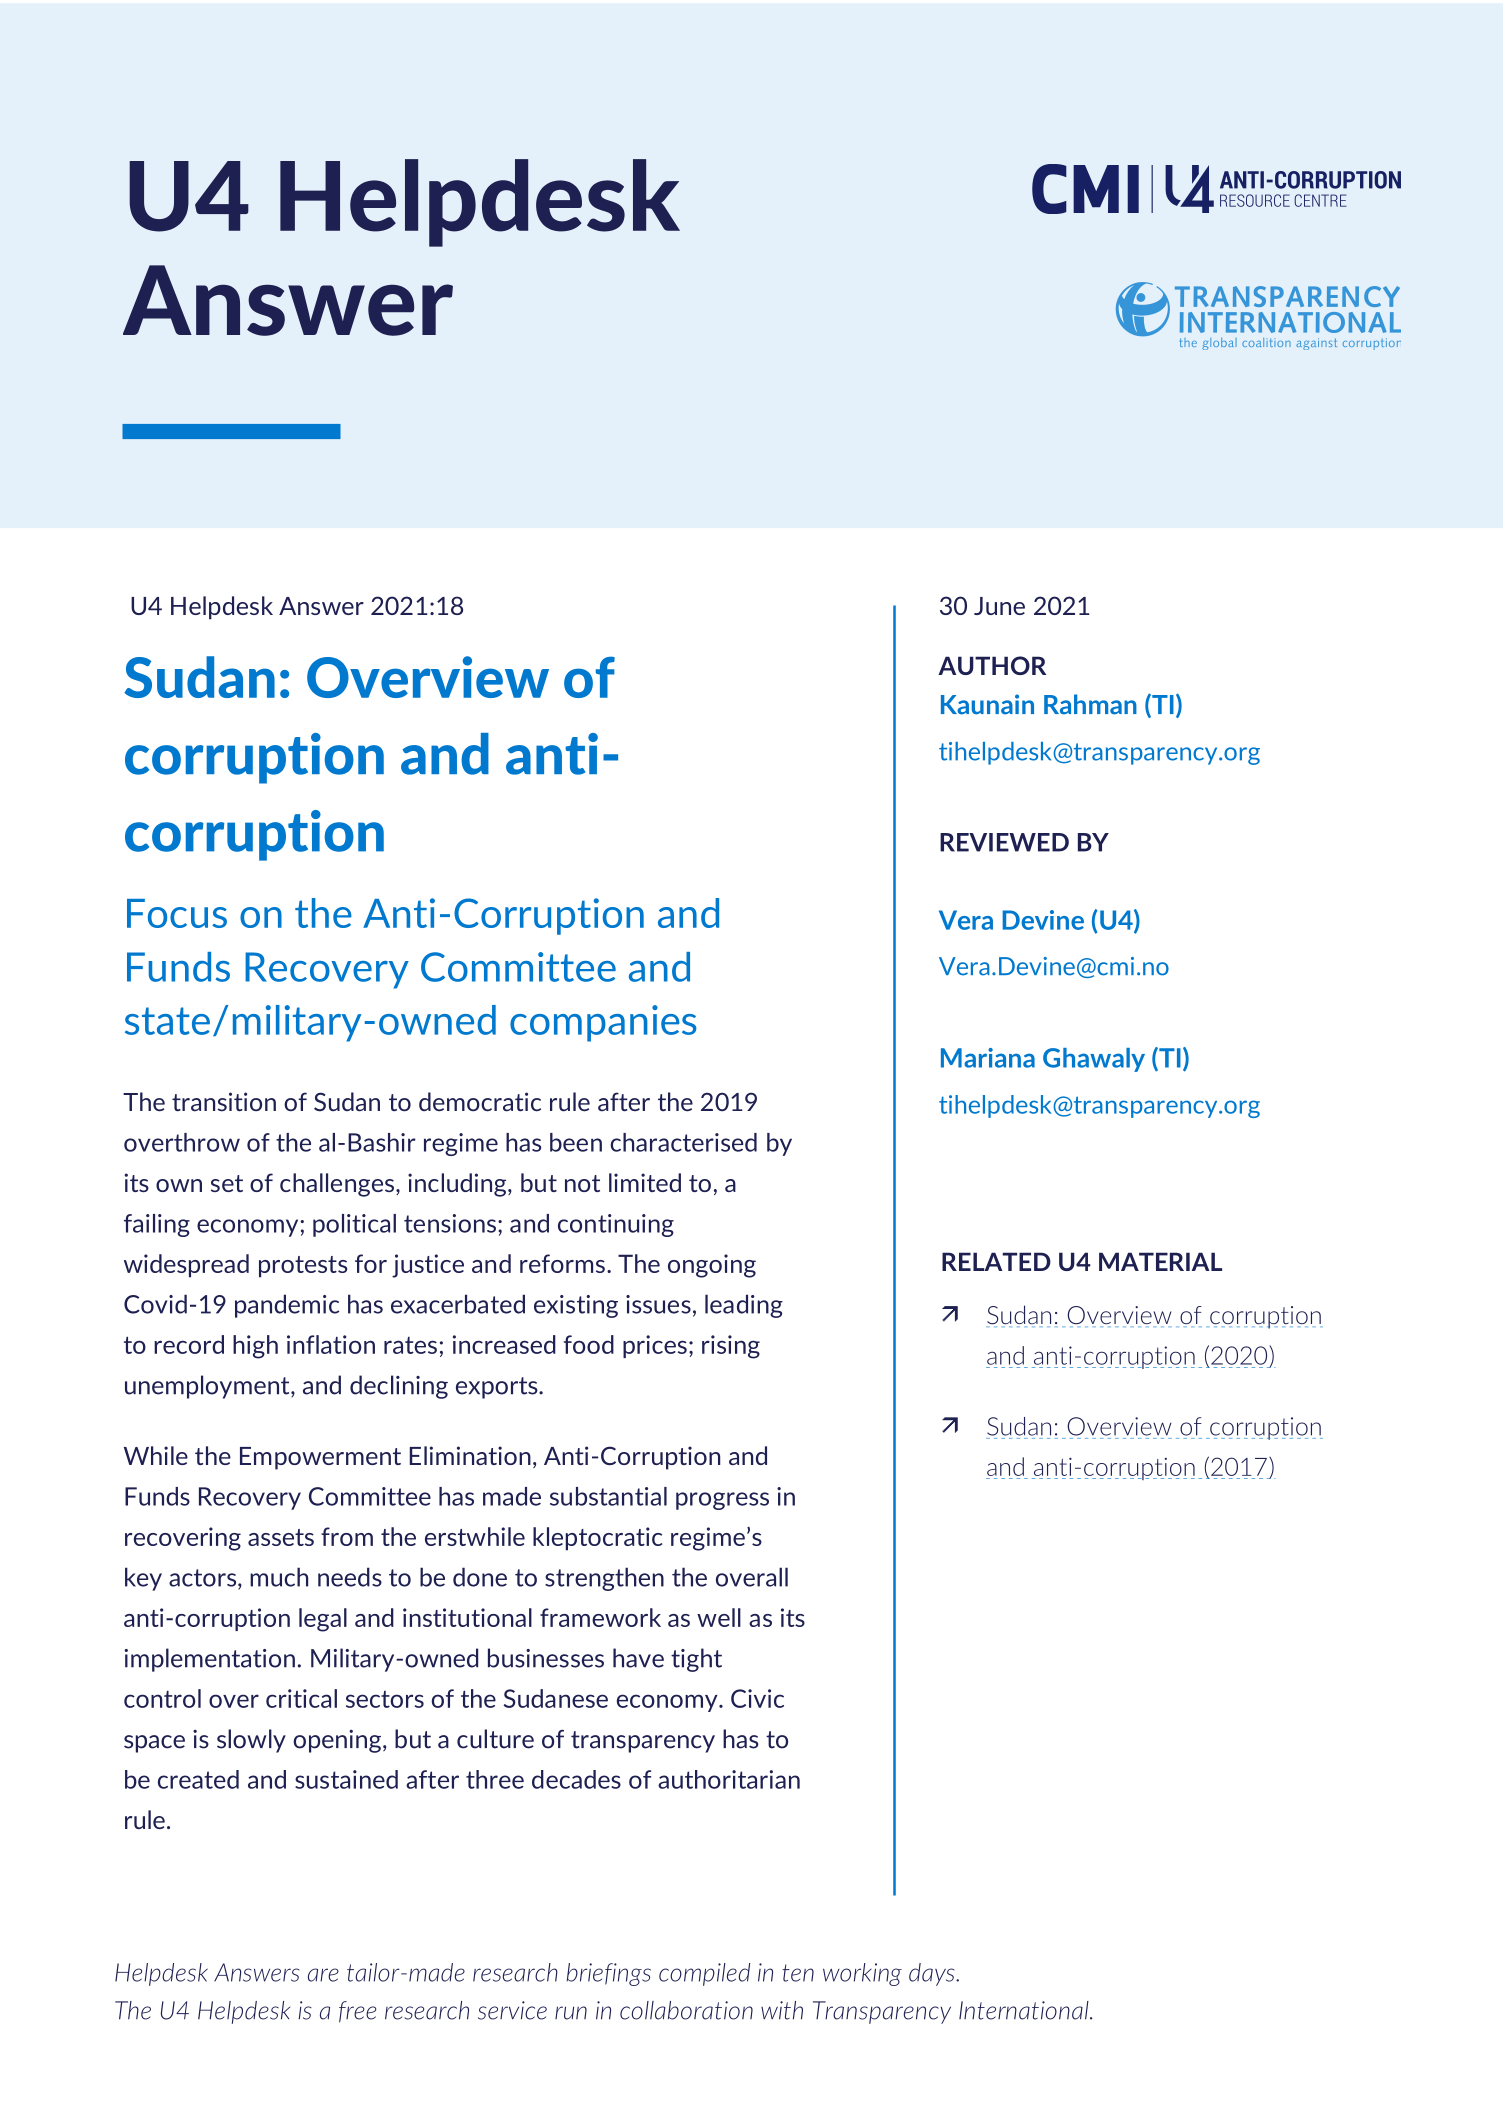 Sudan: Overview of corruption and anti-corruption